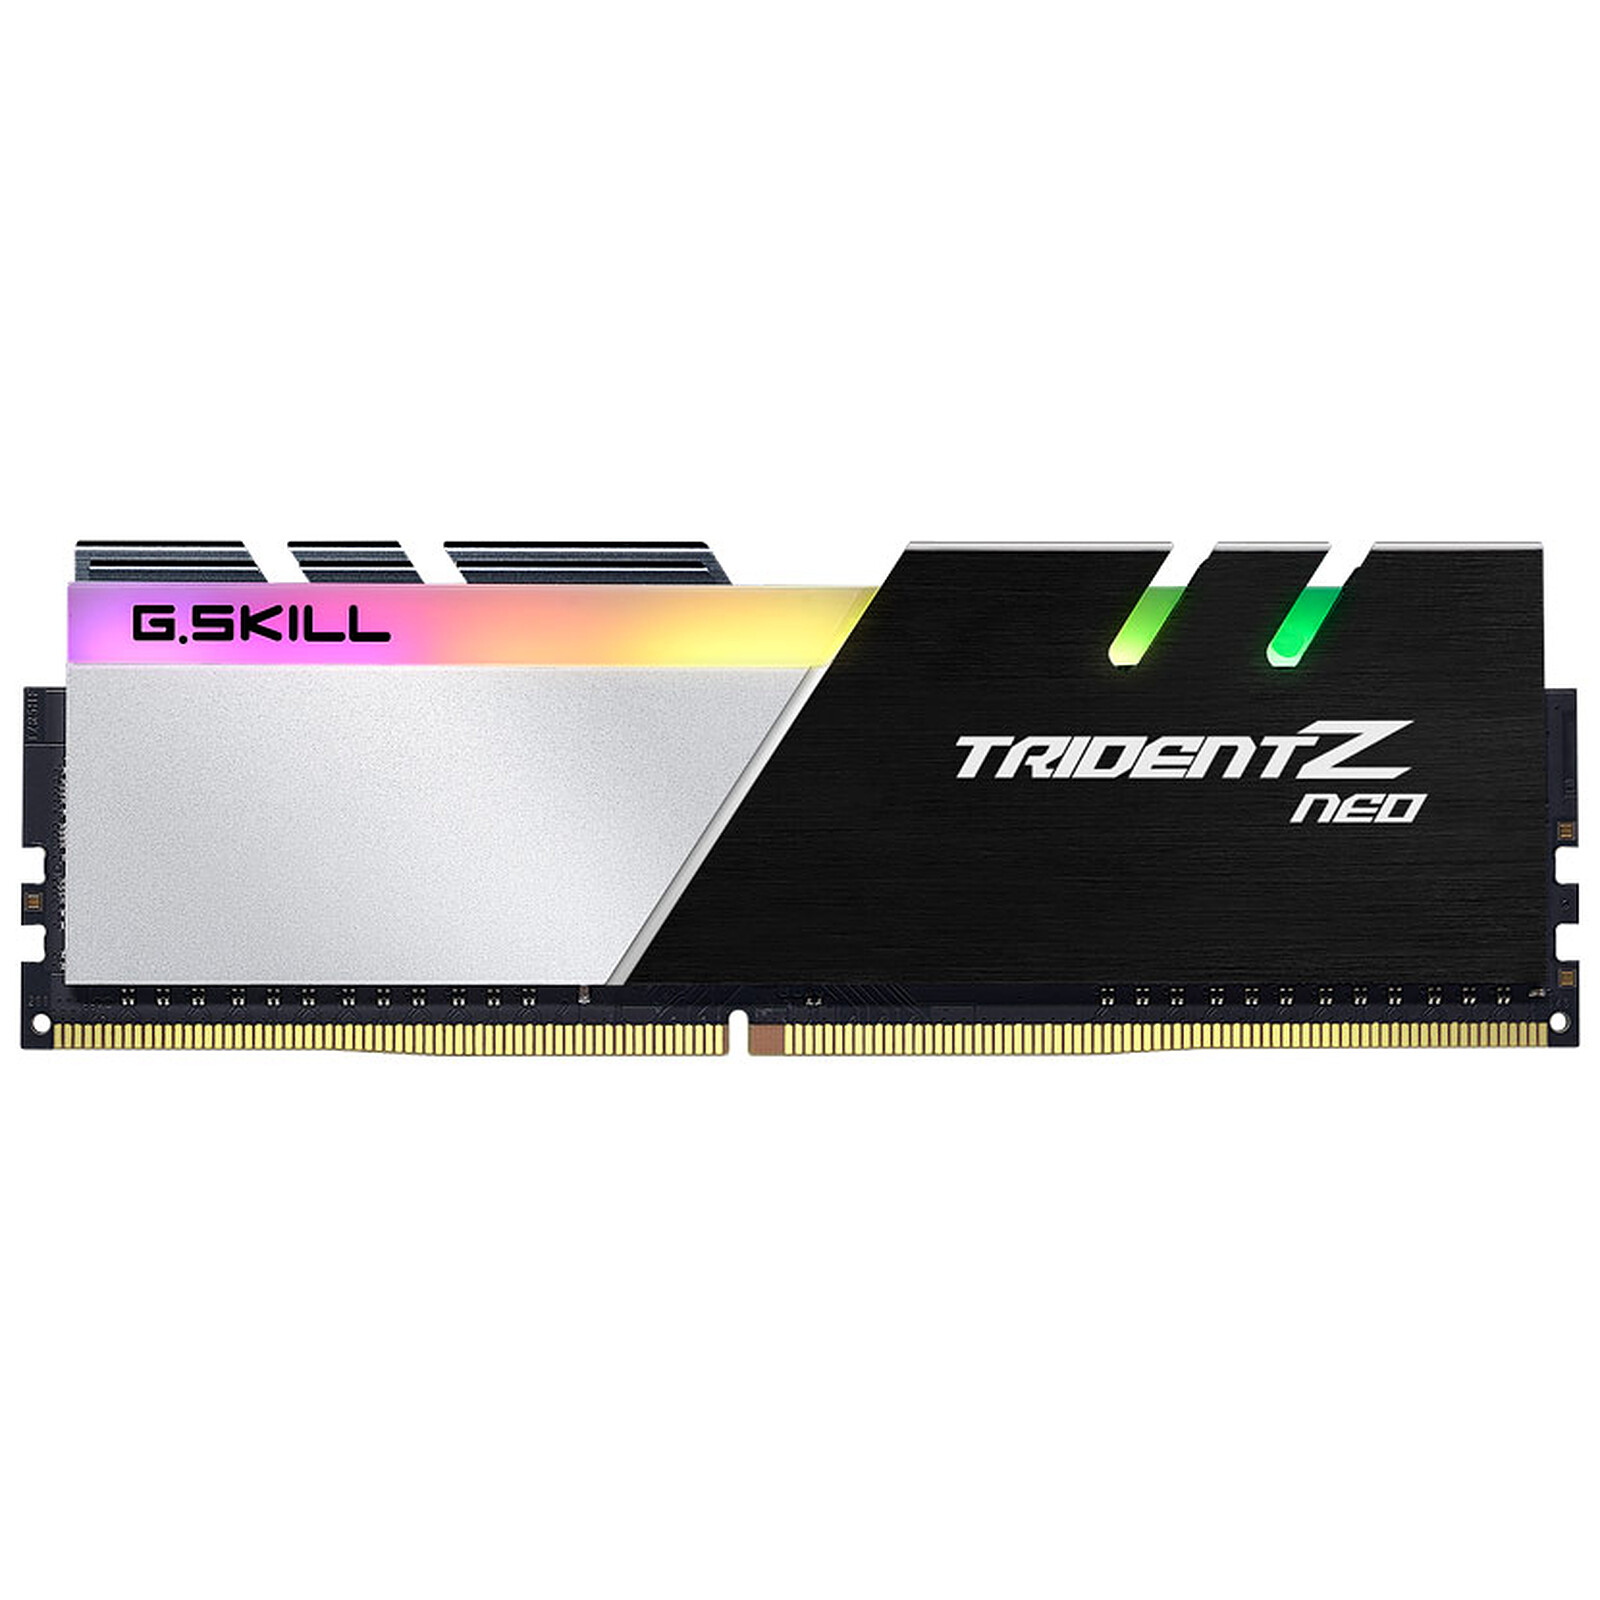 capacidad harina Multa G.Skill Trident Z Neo 64 GB (4x 16 GB) DDR4 3600 MHz CL16 - Memoria PC G. Skill en LDLC